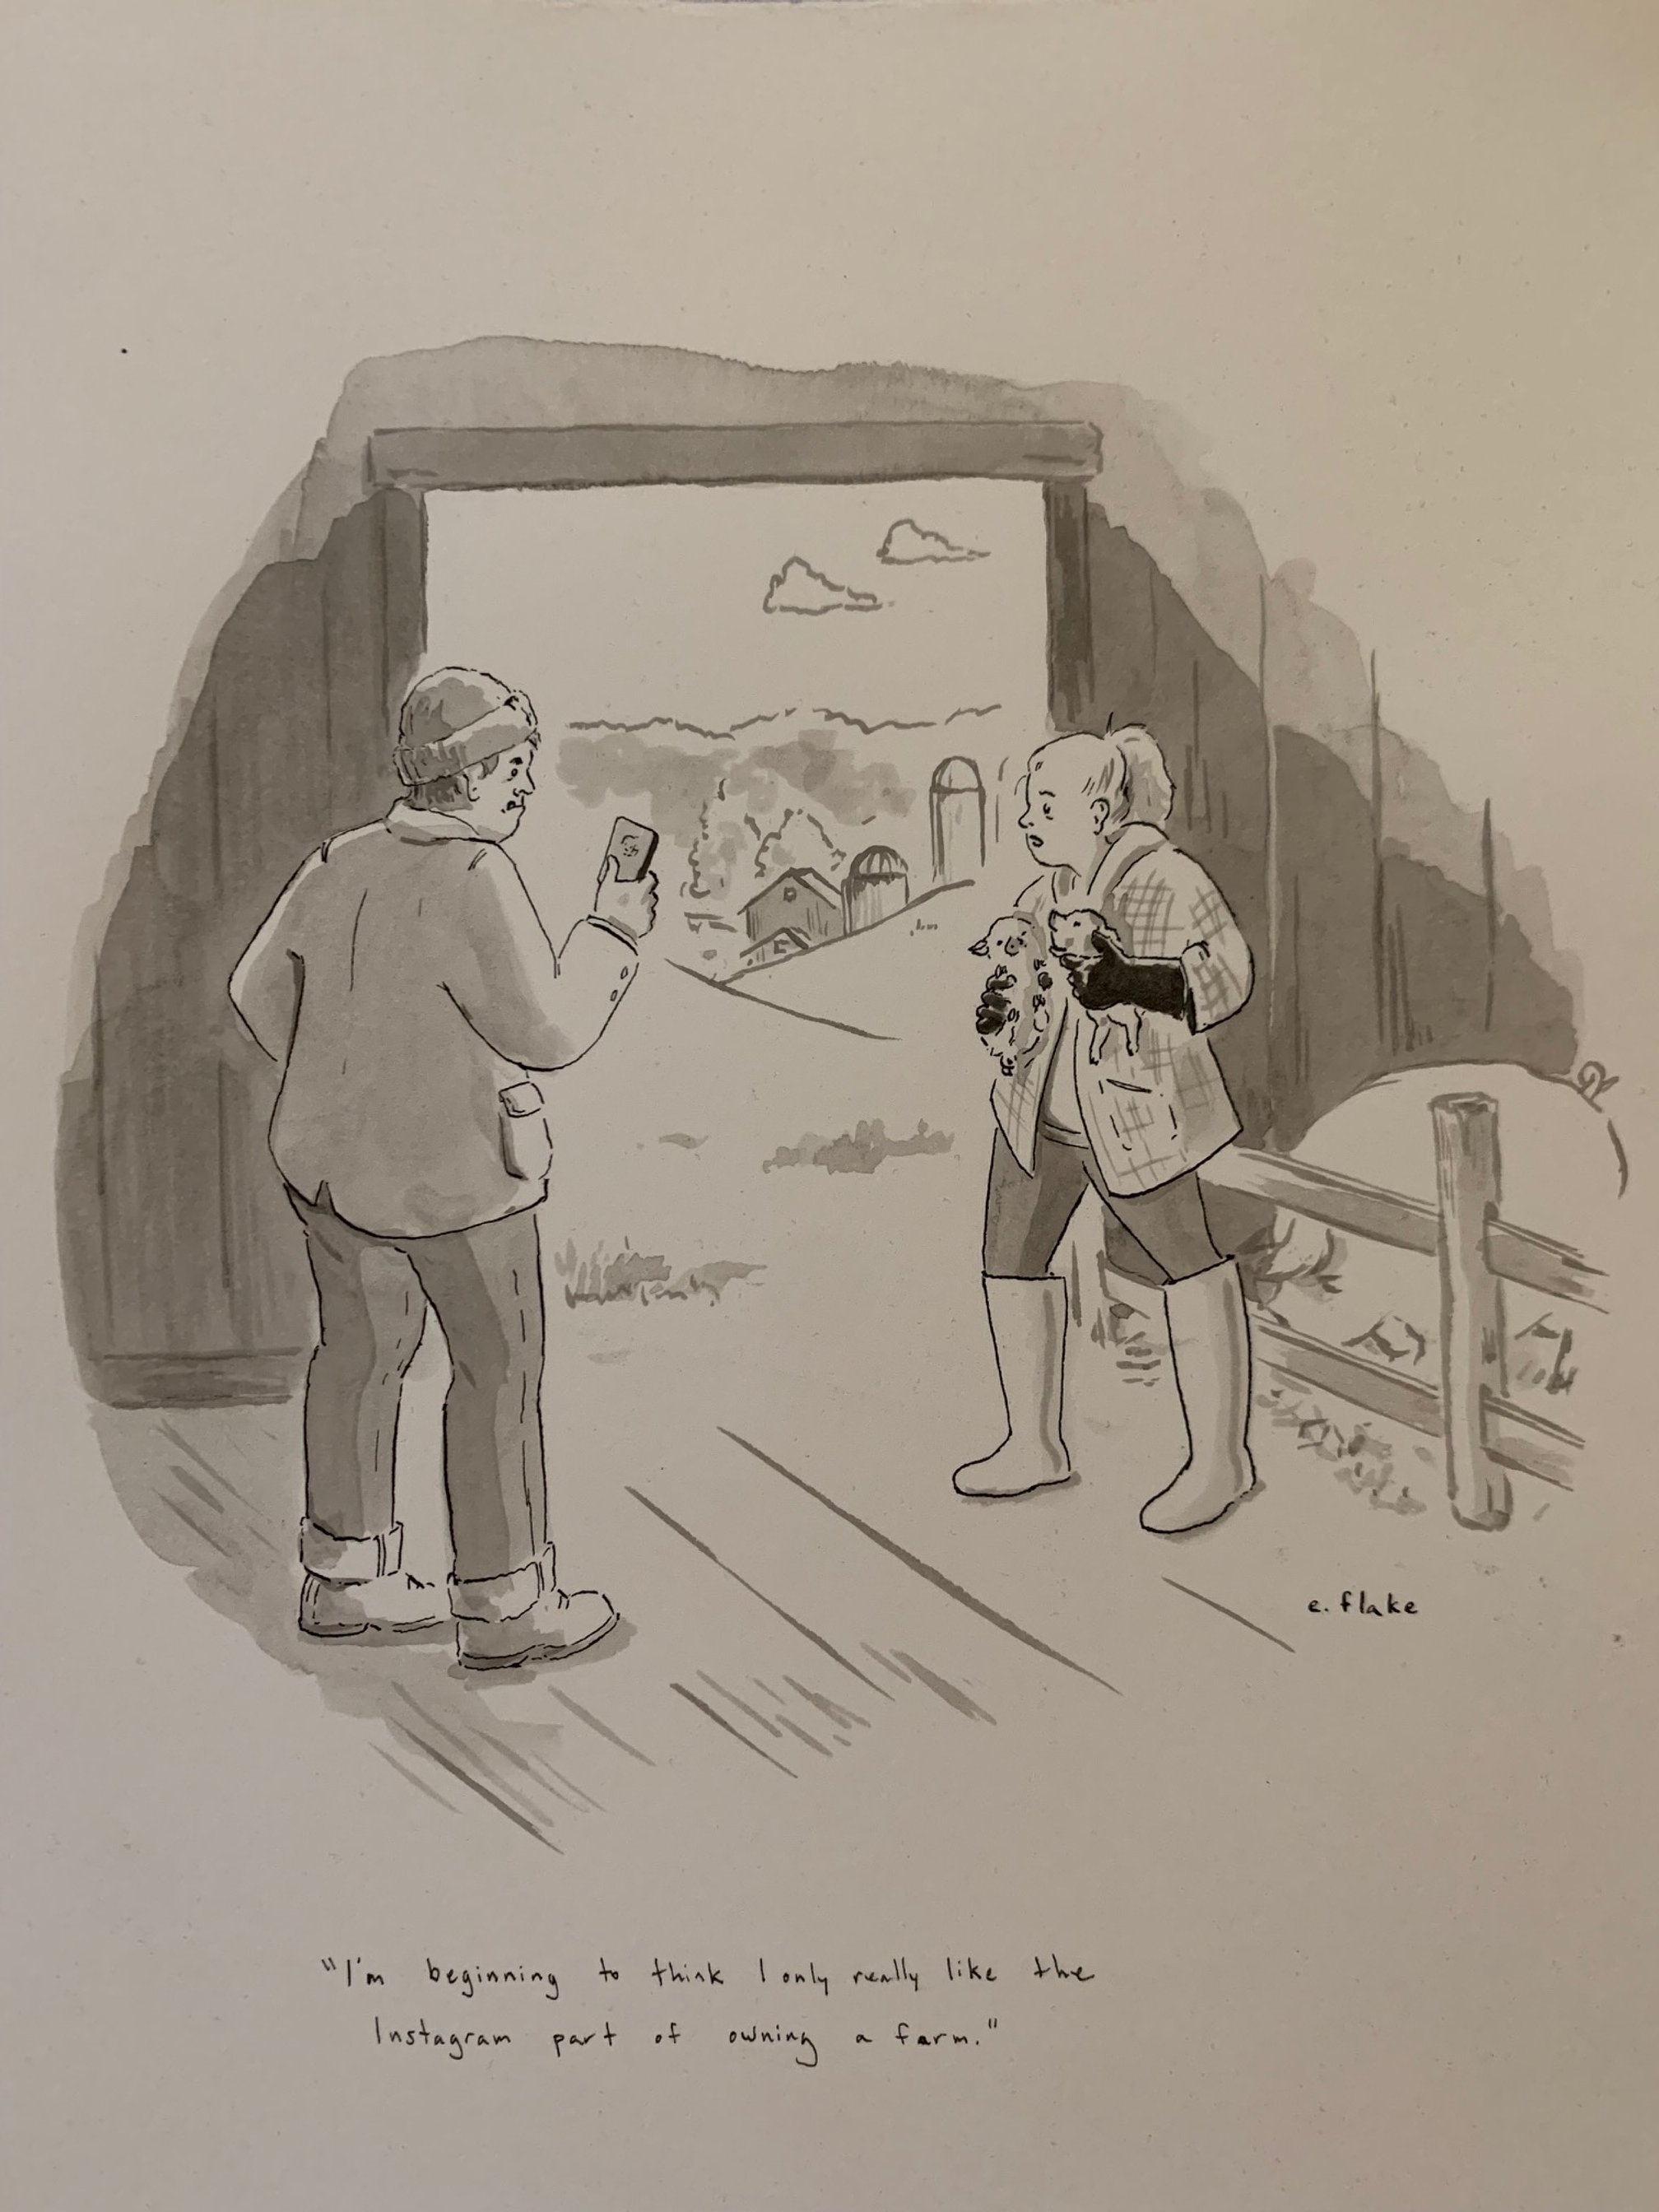 New Yorker cartoon original art - 